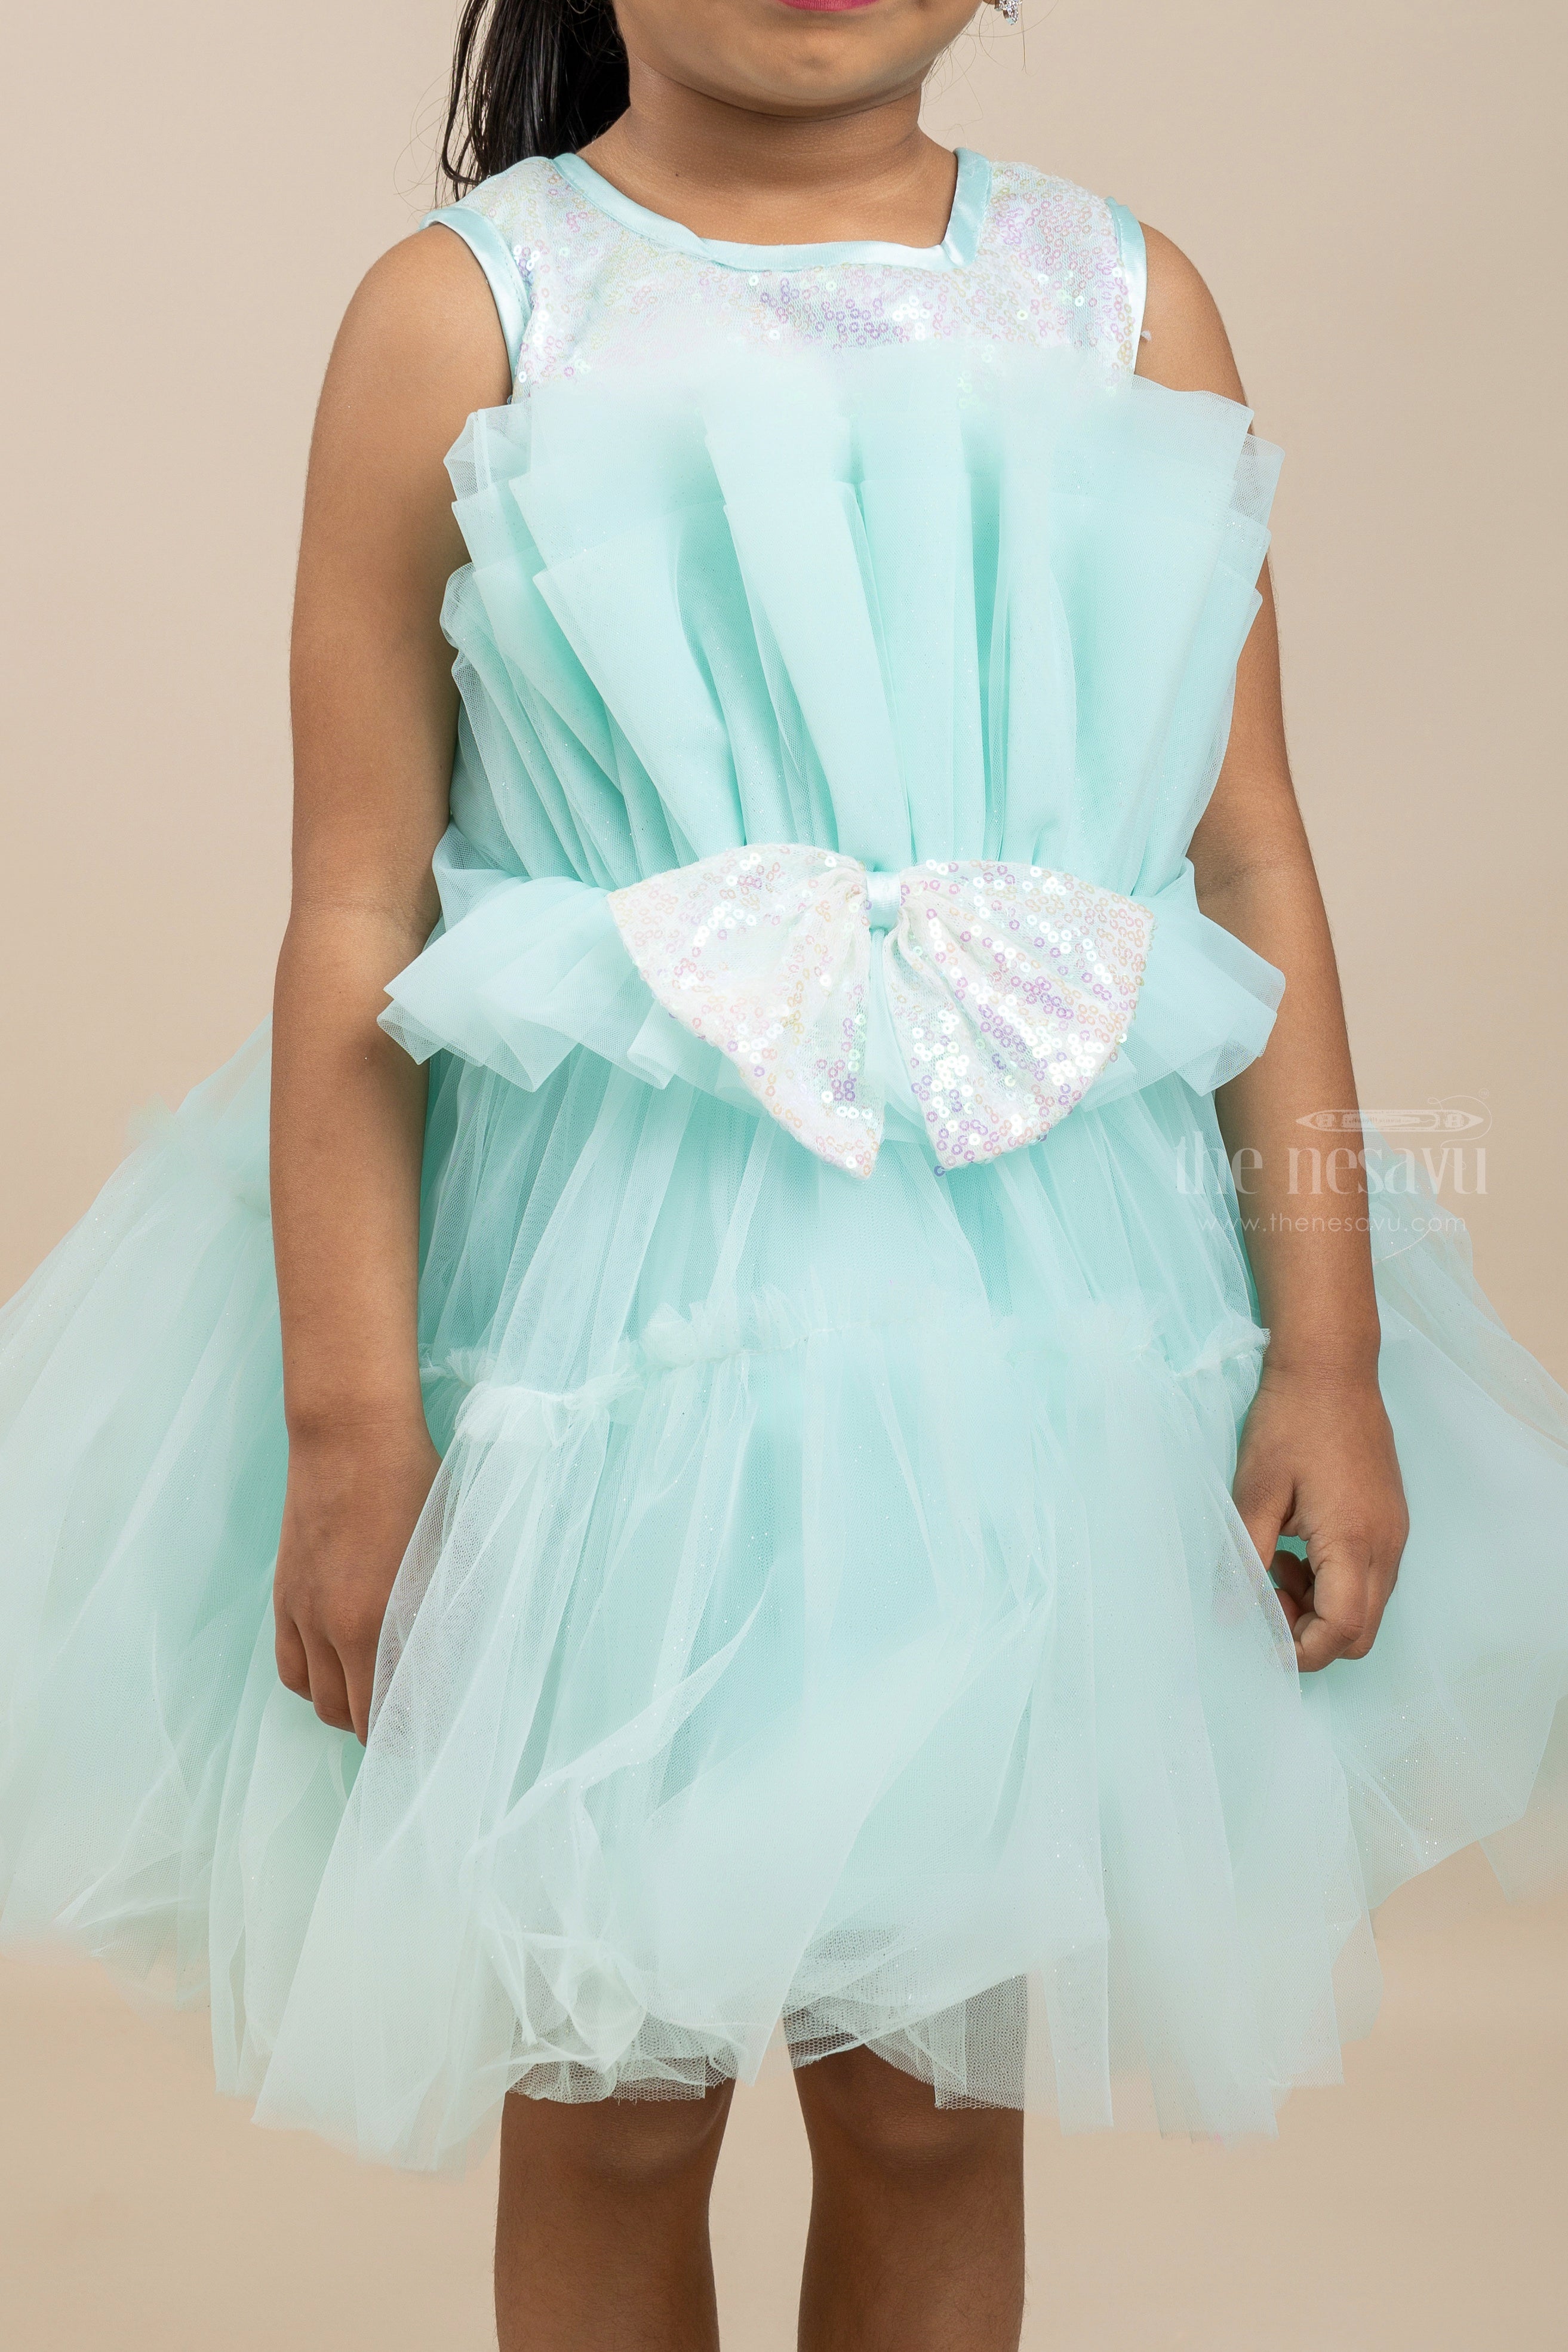 182 Little Girl Blue Velvet Dress Stock Photos - Free & Royalty-Free Stock  Photos from Dreamstime